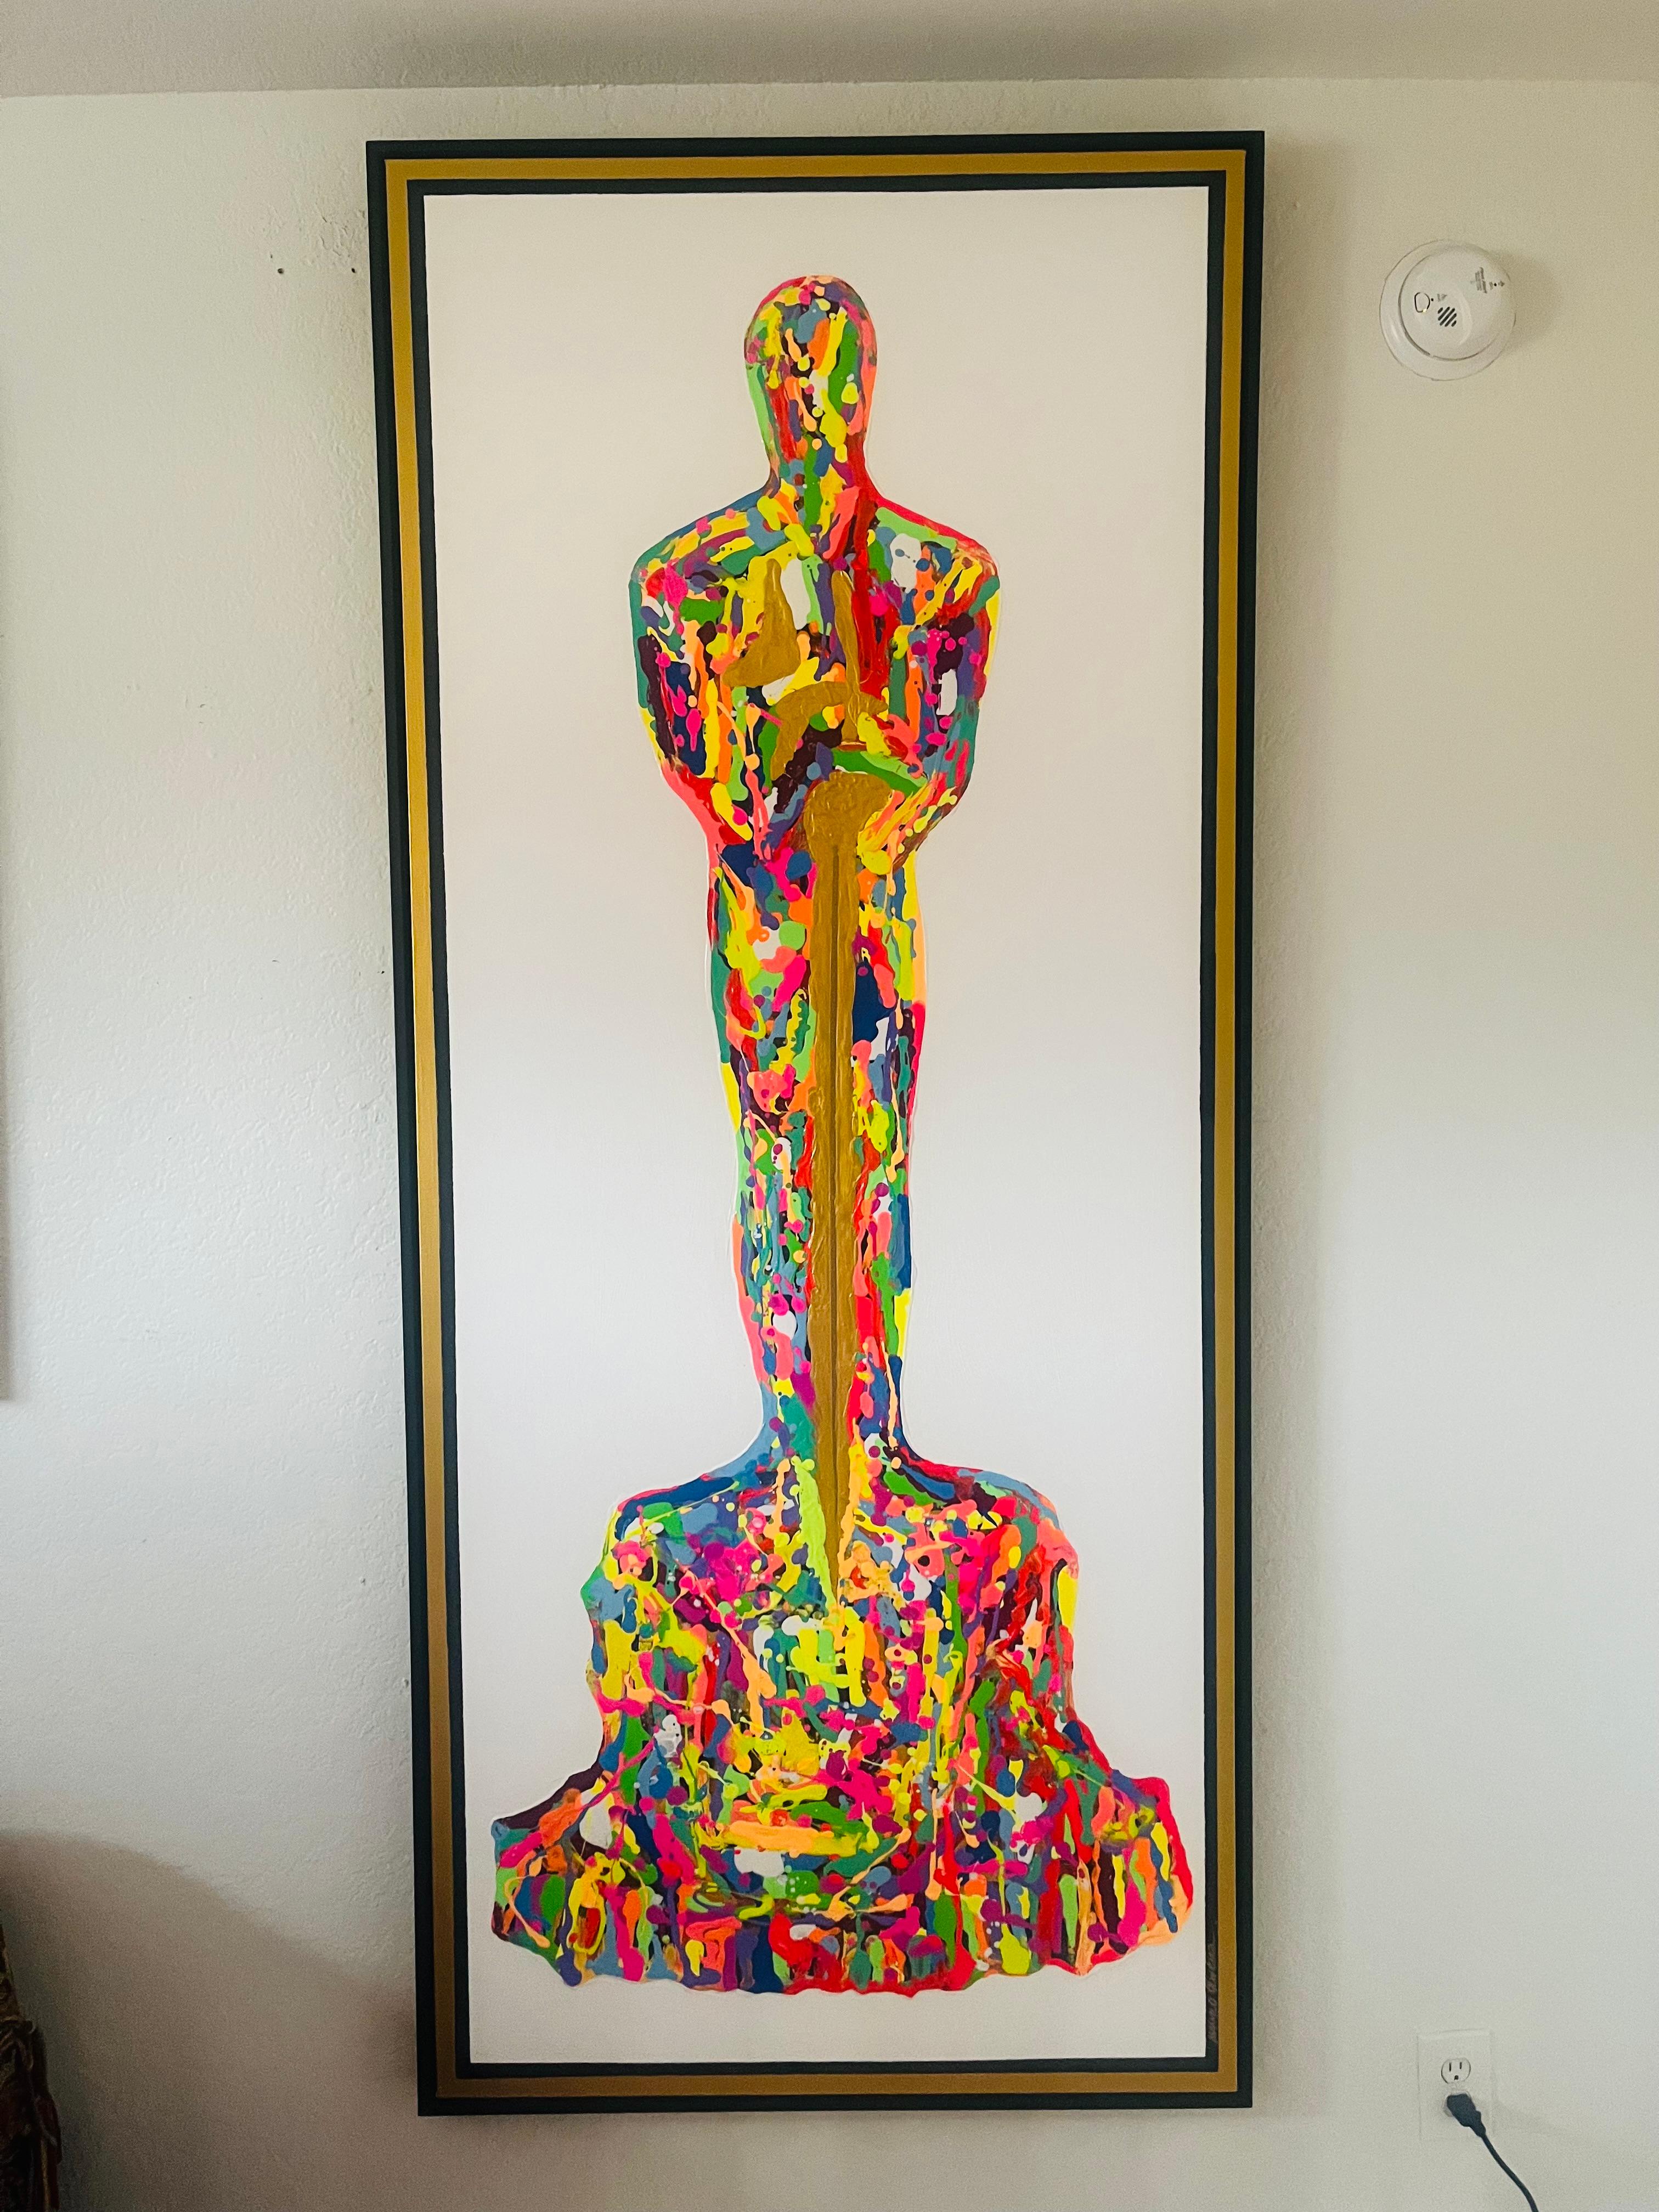 NEON Oscar (Original gerahmtes Mixed Media-Kunstwerk) (Pop-Art), Painting, von Mauro Oliveira